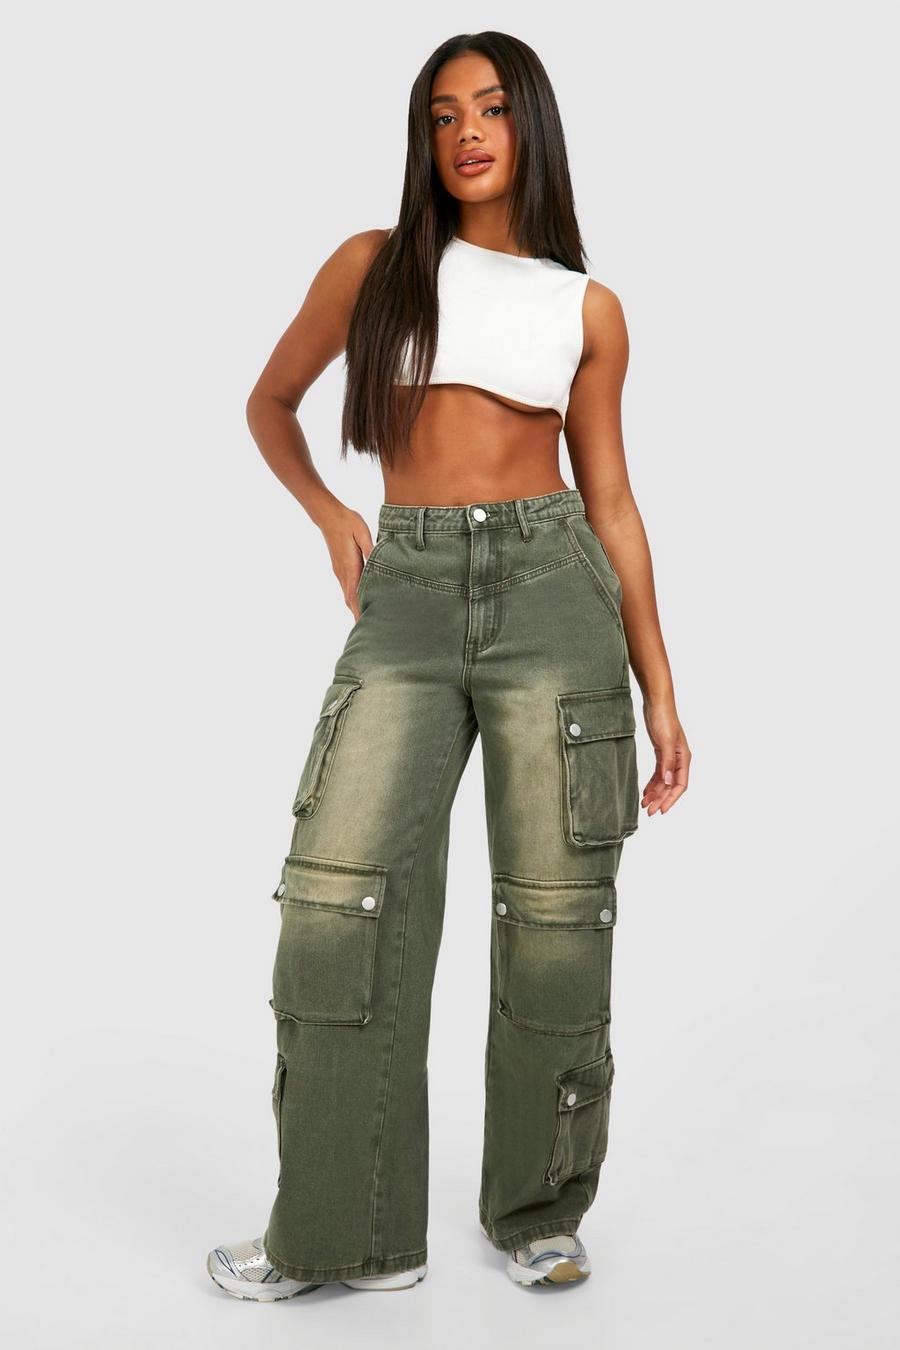 Womens Khaki Green Lightweight Combat Trousers Cargo Jeans Loose